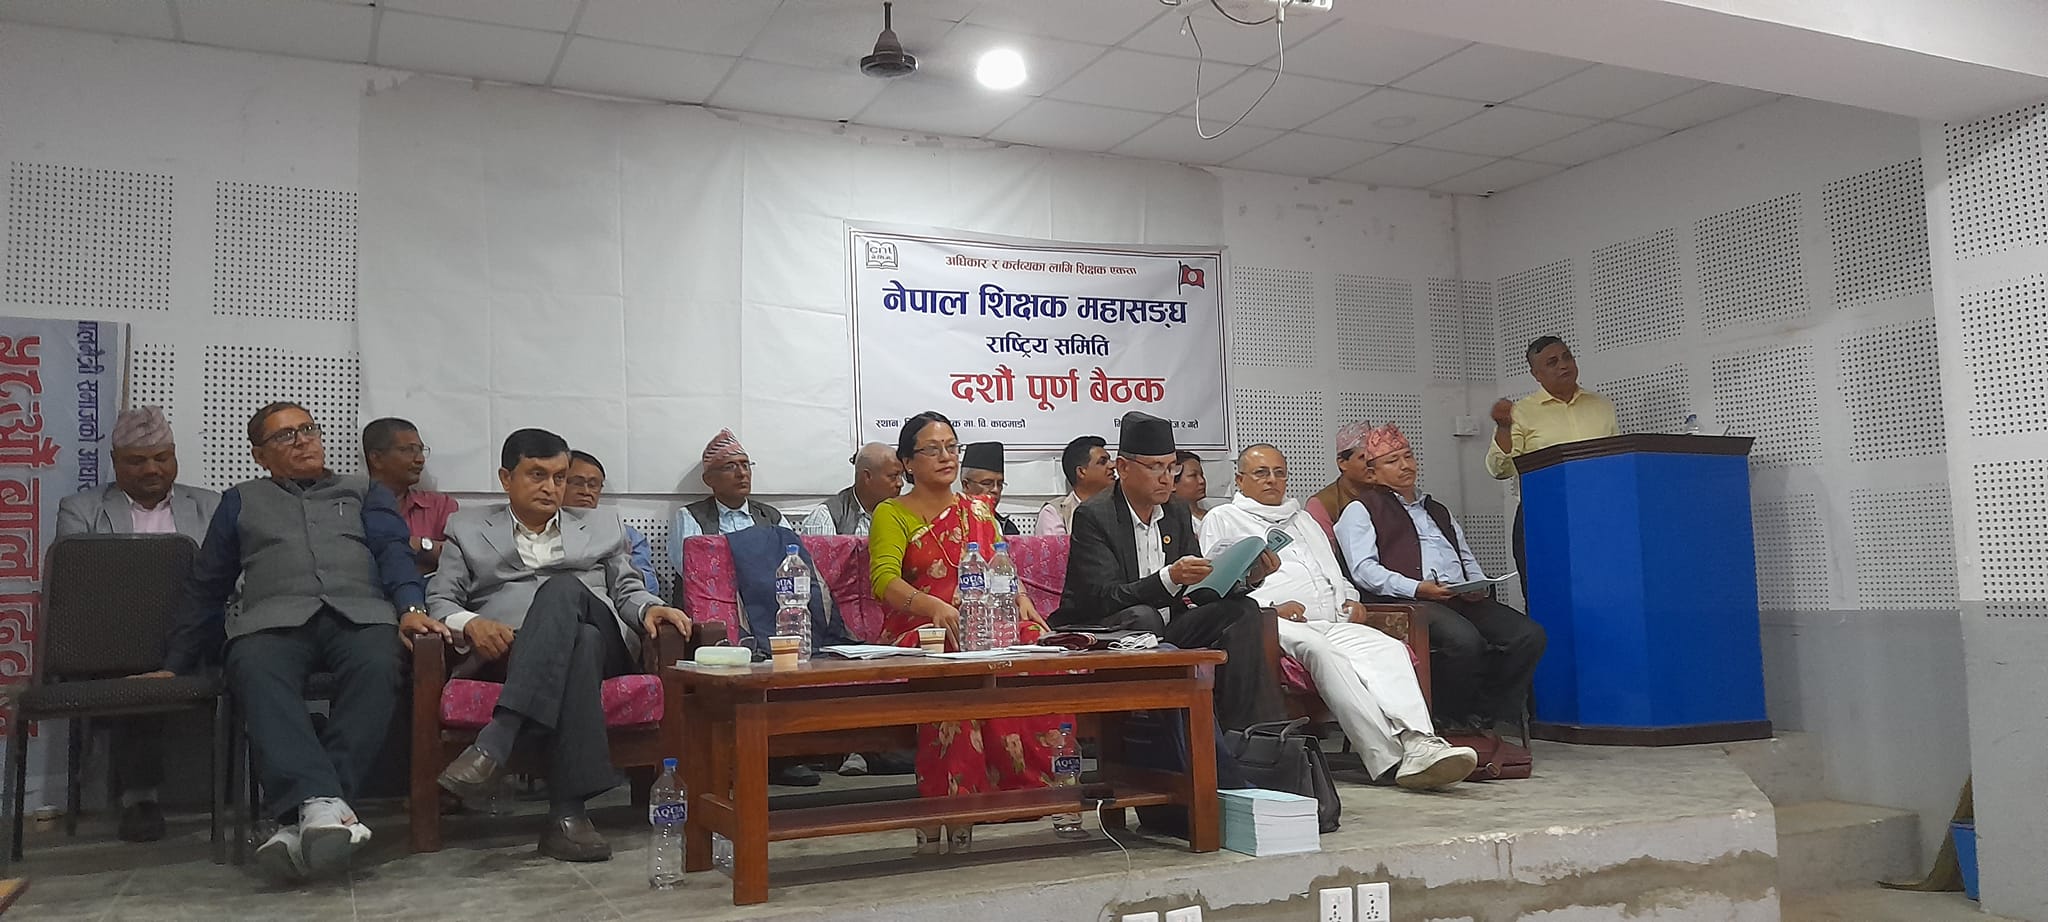 नेपाल शिक्षक महासंघको महाधिवेशन स्थगित